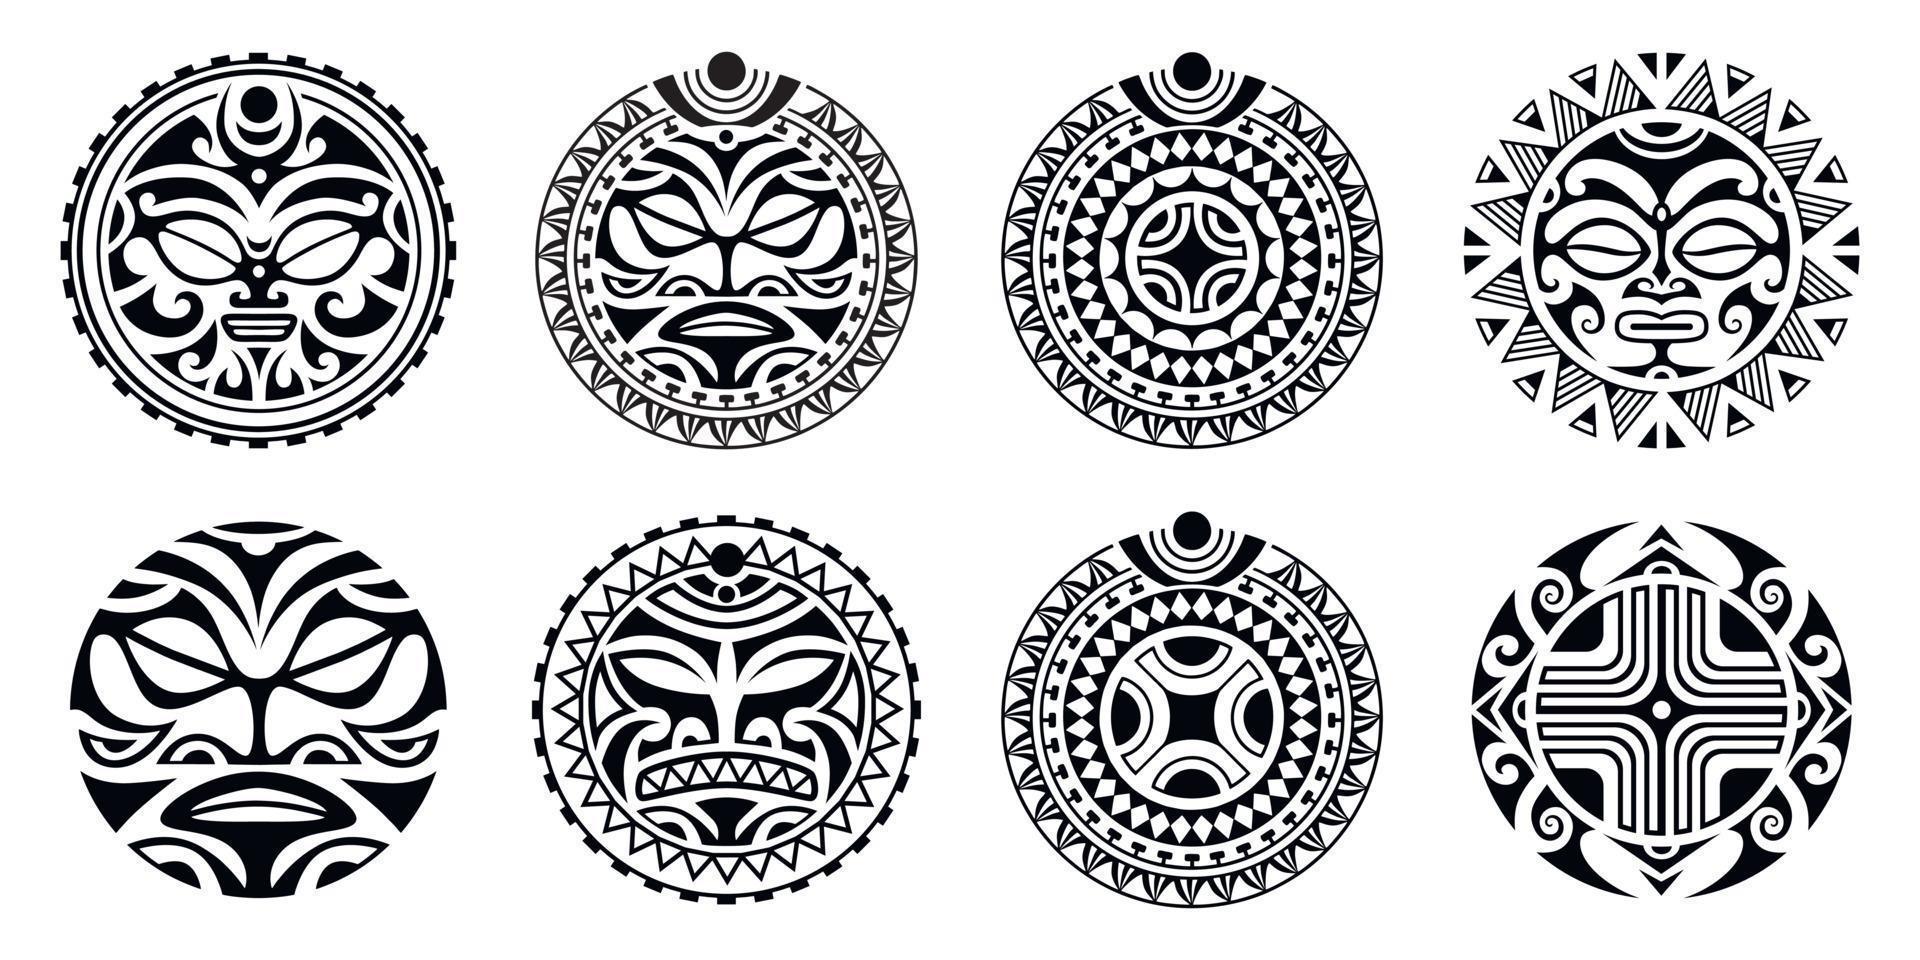 conjunto de ornamento de tatuagem maori redondo. estilo africano, maia, asteca, étnico e tribal. vetor